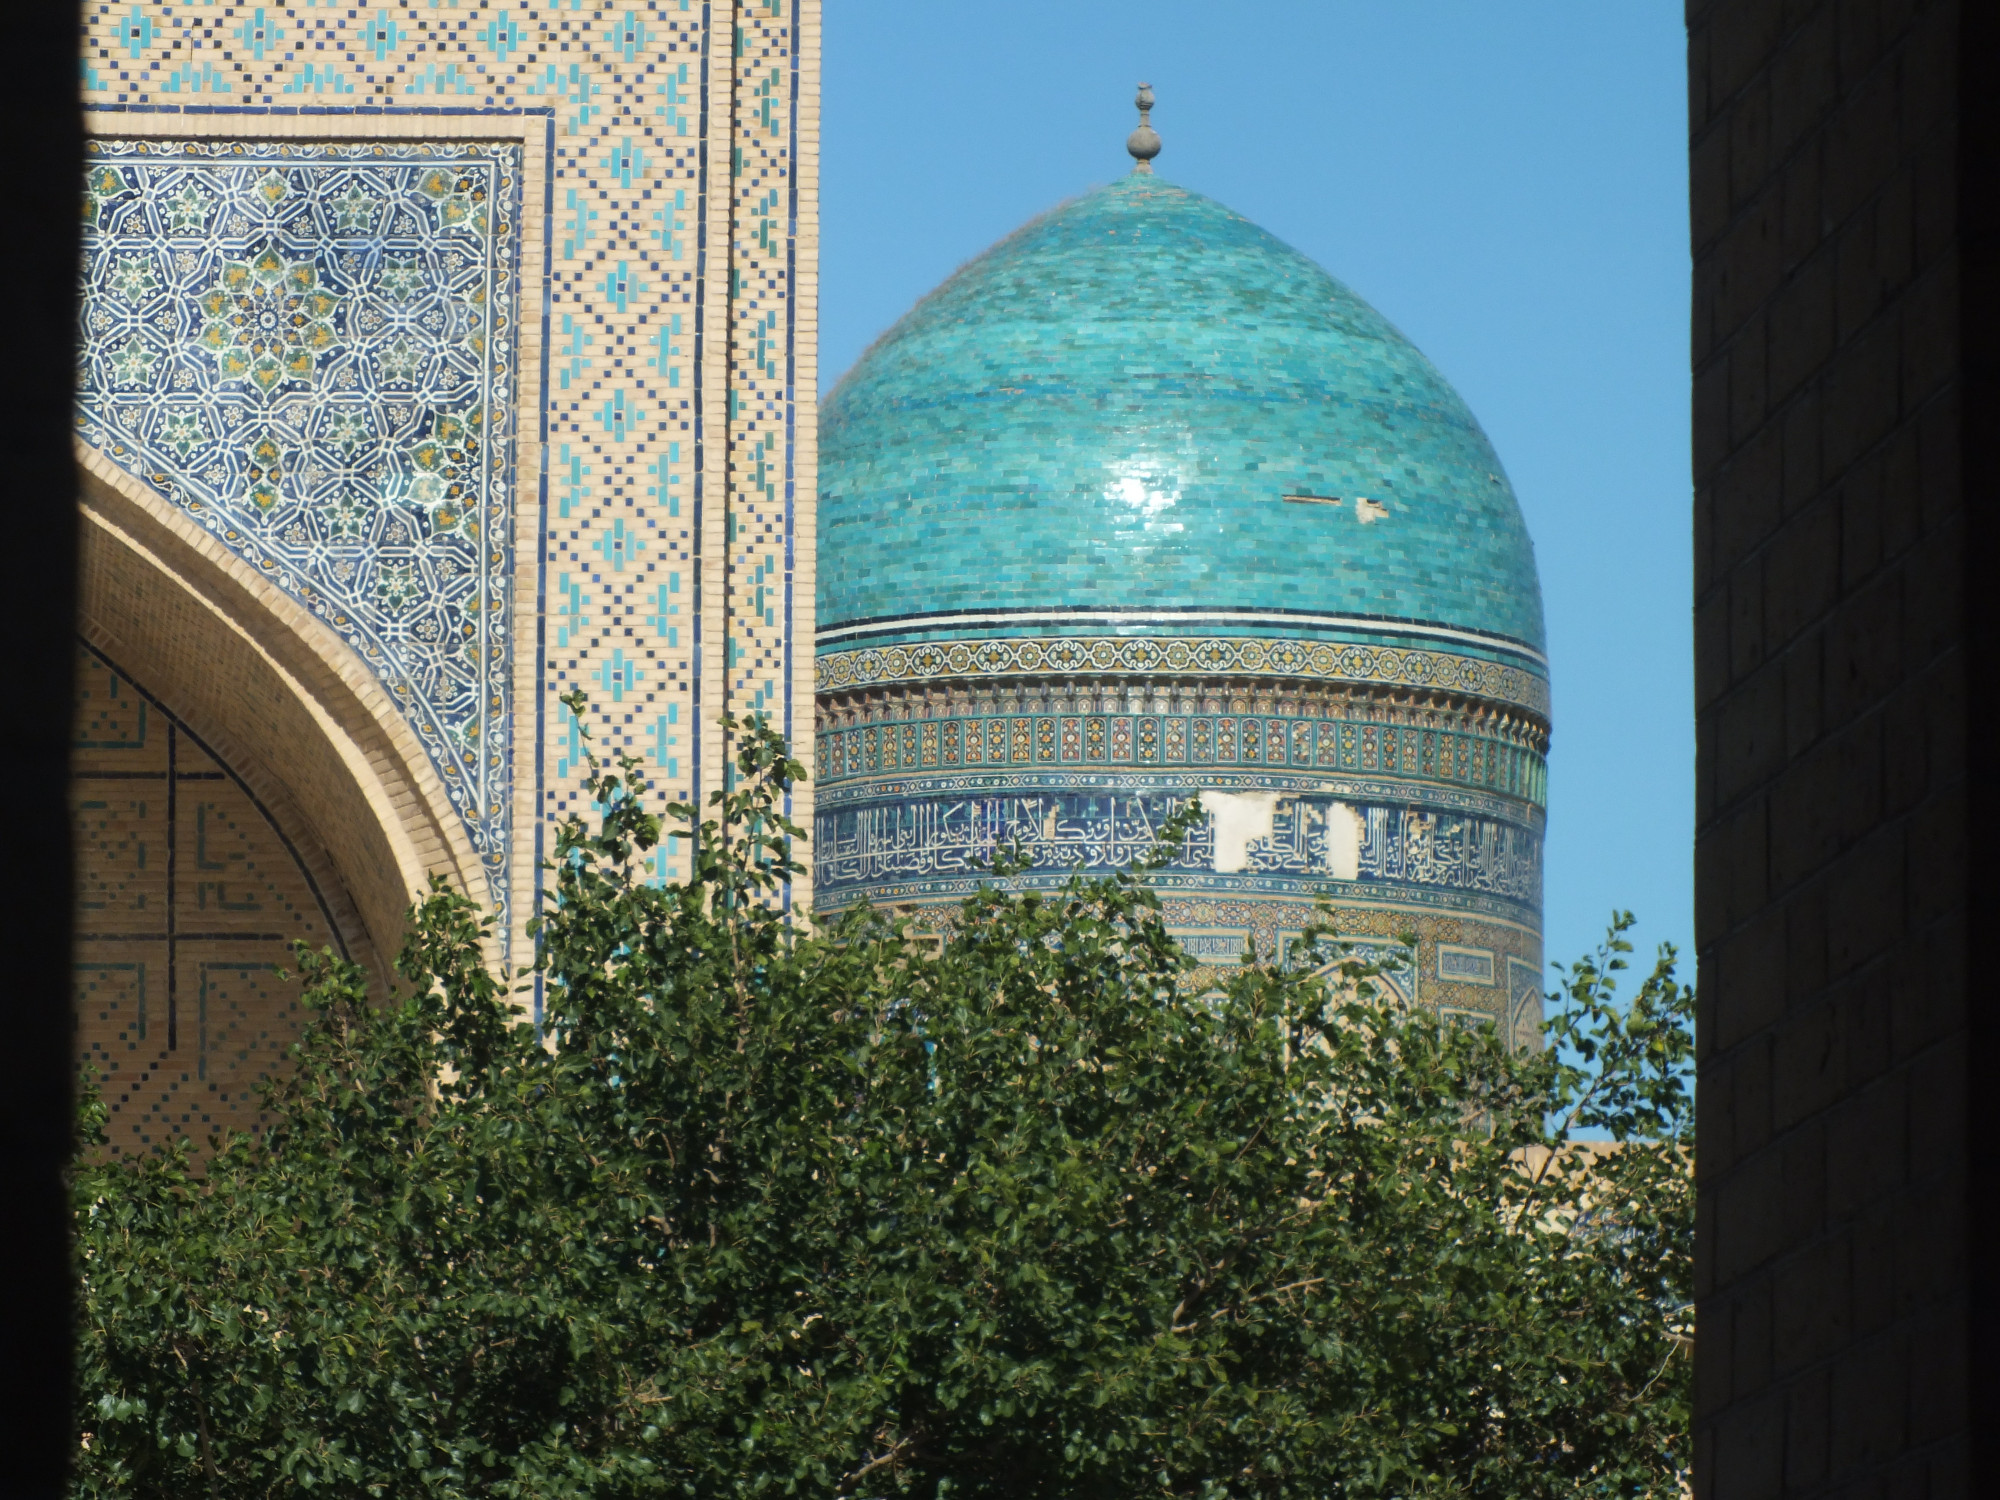 Po-i Kalyan square, Uzbekistan